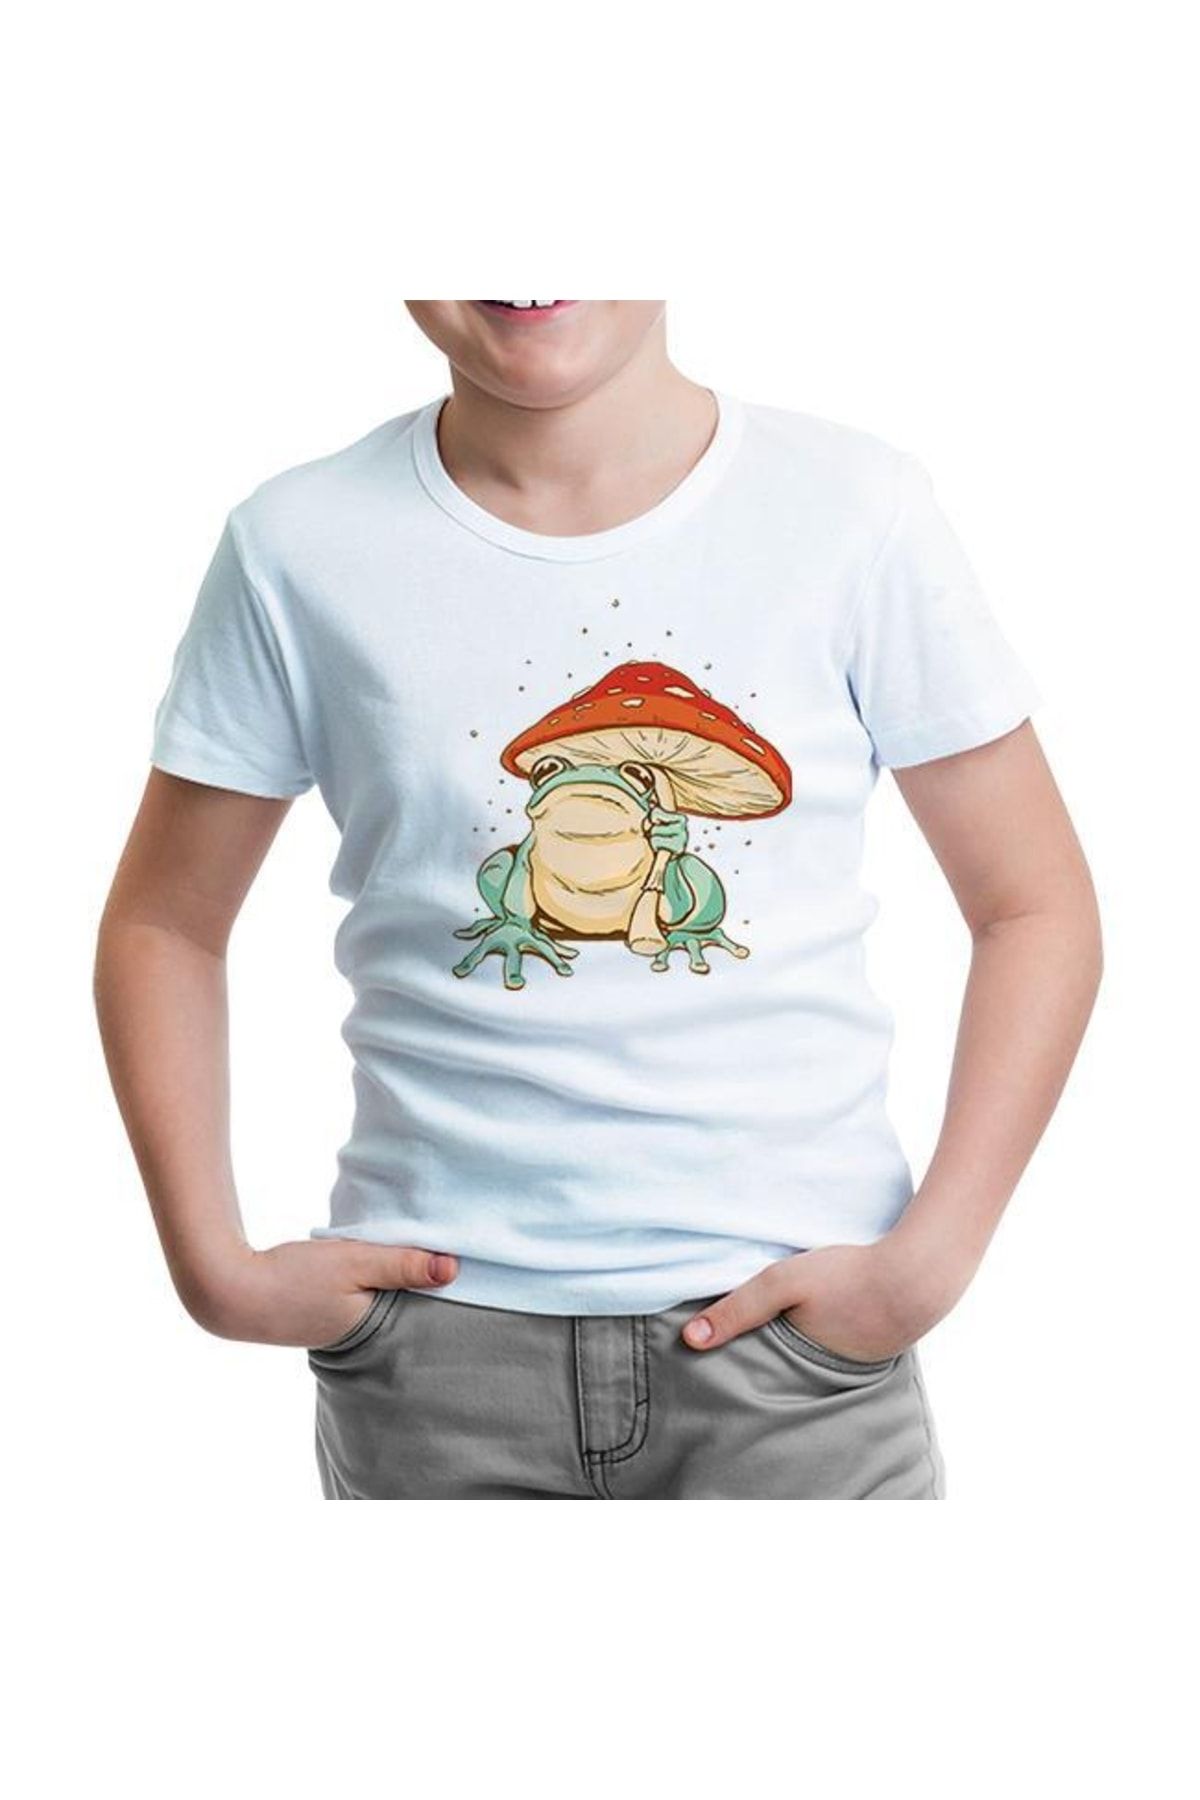 Lord T-Shirt A Frog With A Mushroom Umbrella Beyaz Çocuk Tshirt